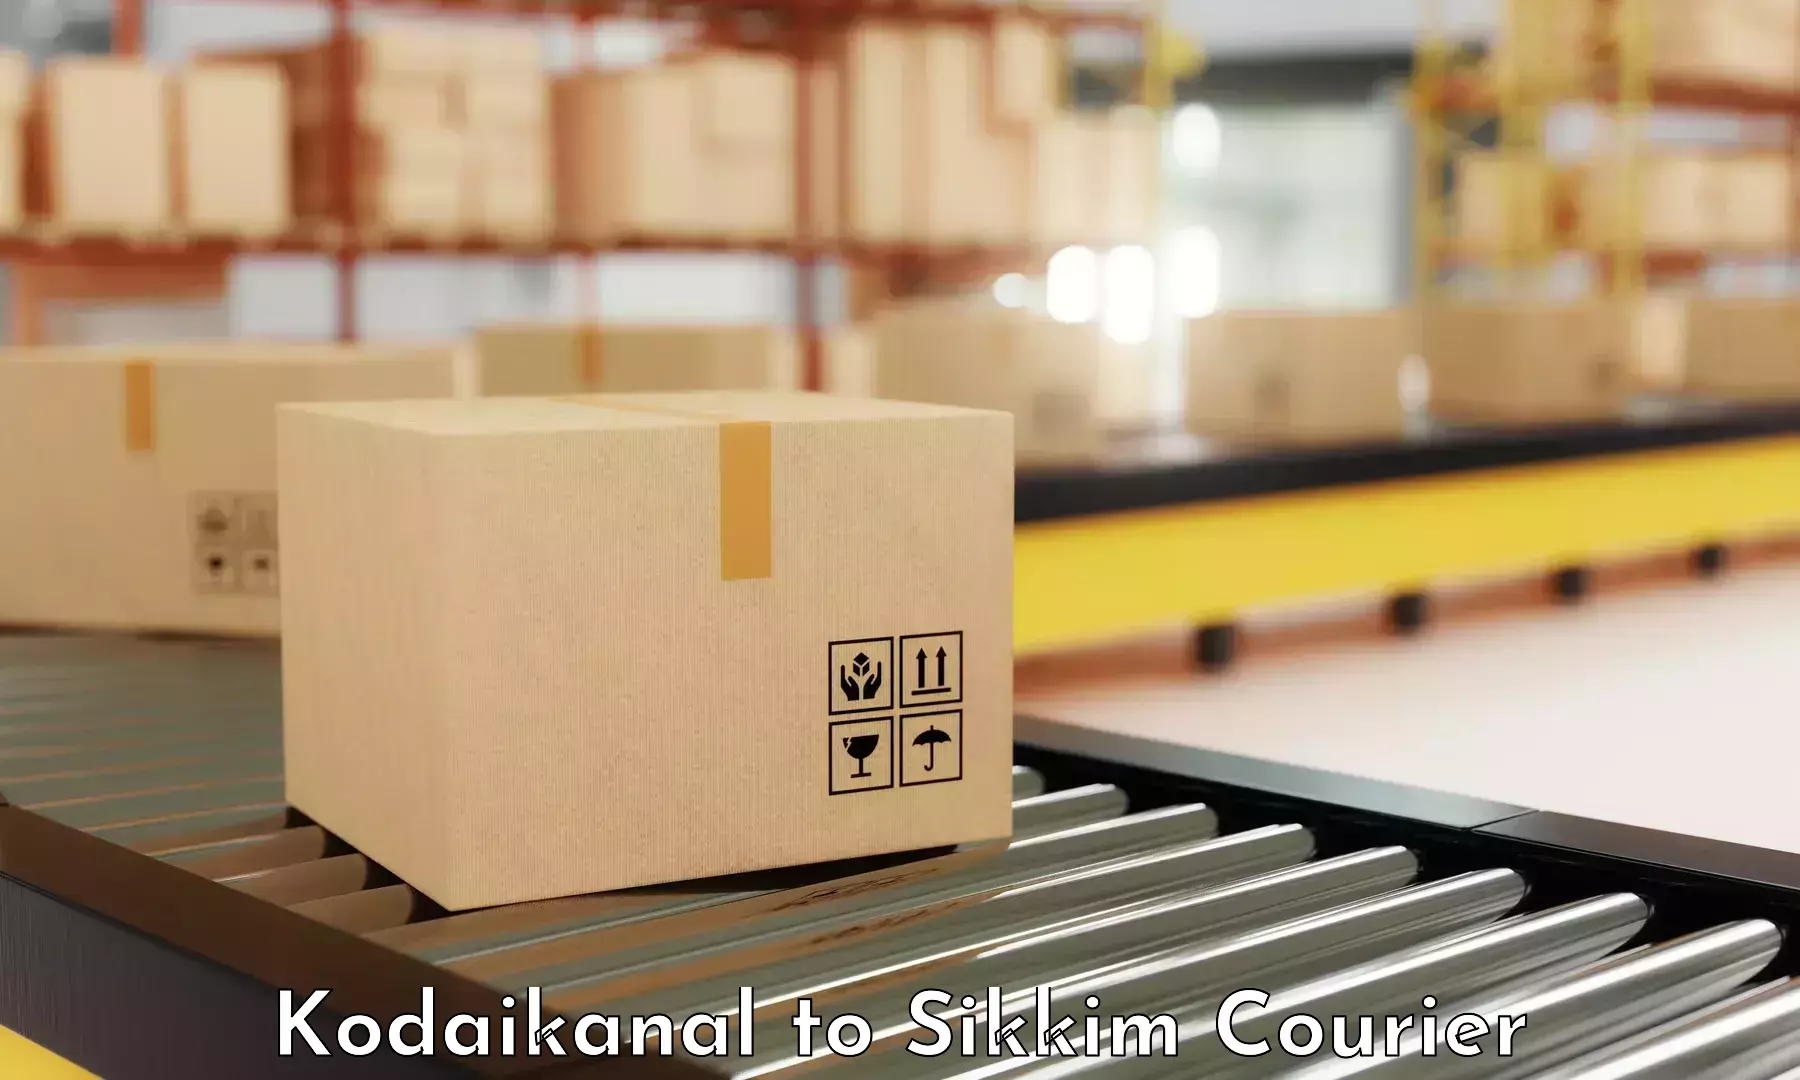 Efficient cargo handling Kodaikanal to South Sikkim